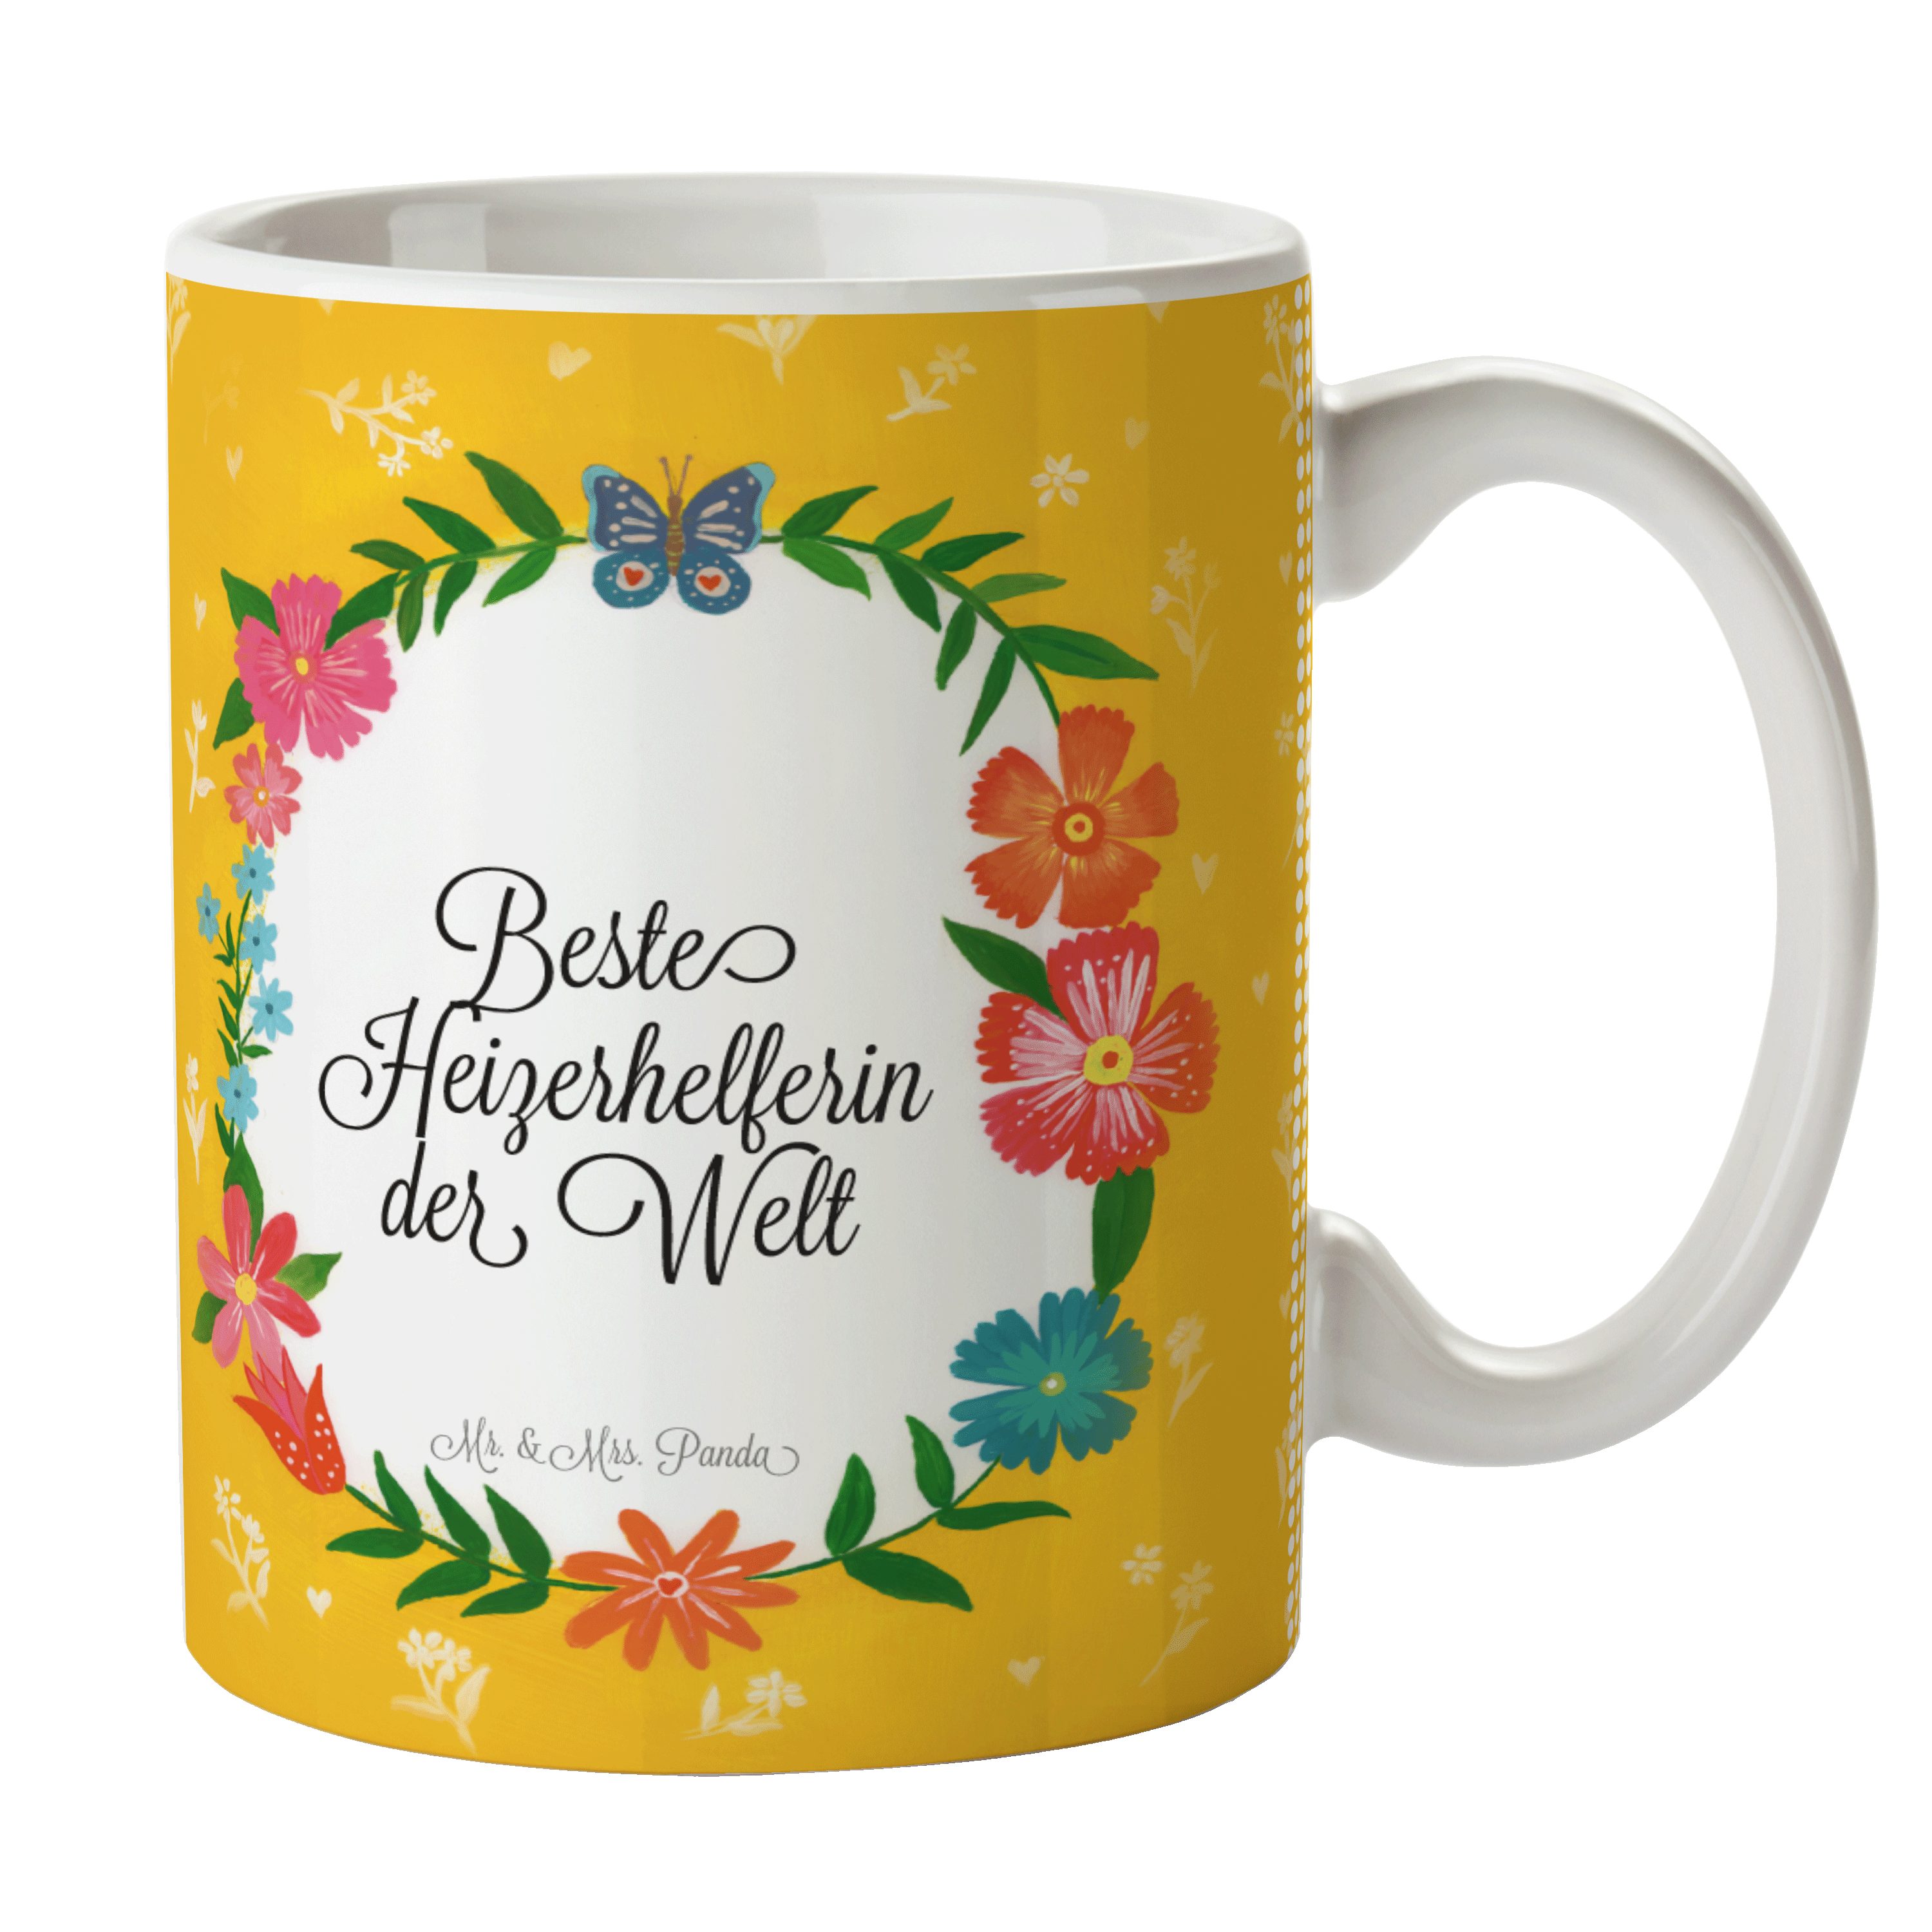 Mr. & Mrs. Panda - Geschenk, Heizerhelferin Büro Tasse Tasse, Motive, Tasse Keramik Geschenk Tasse